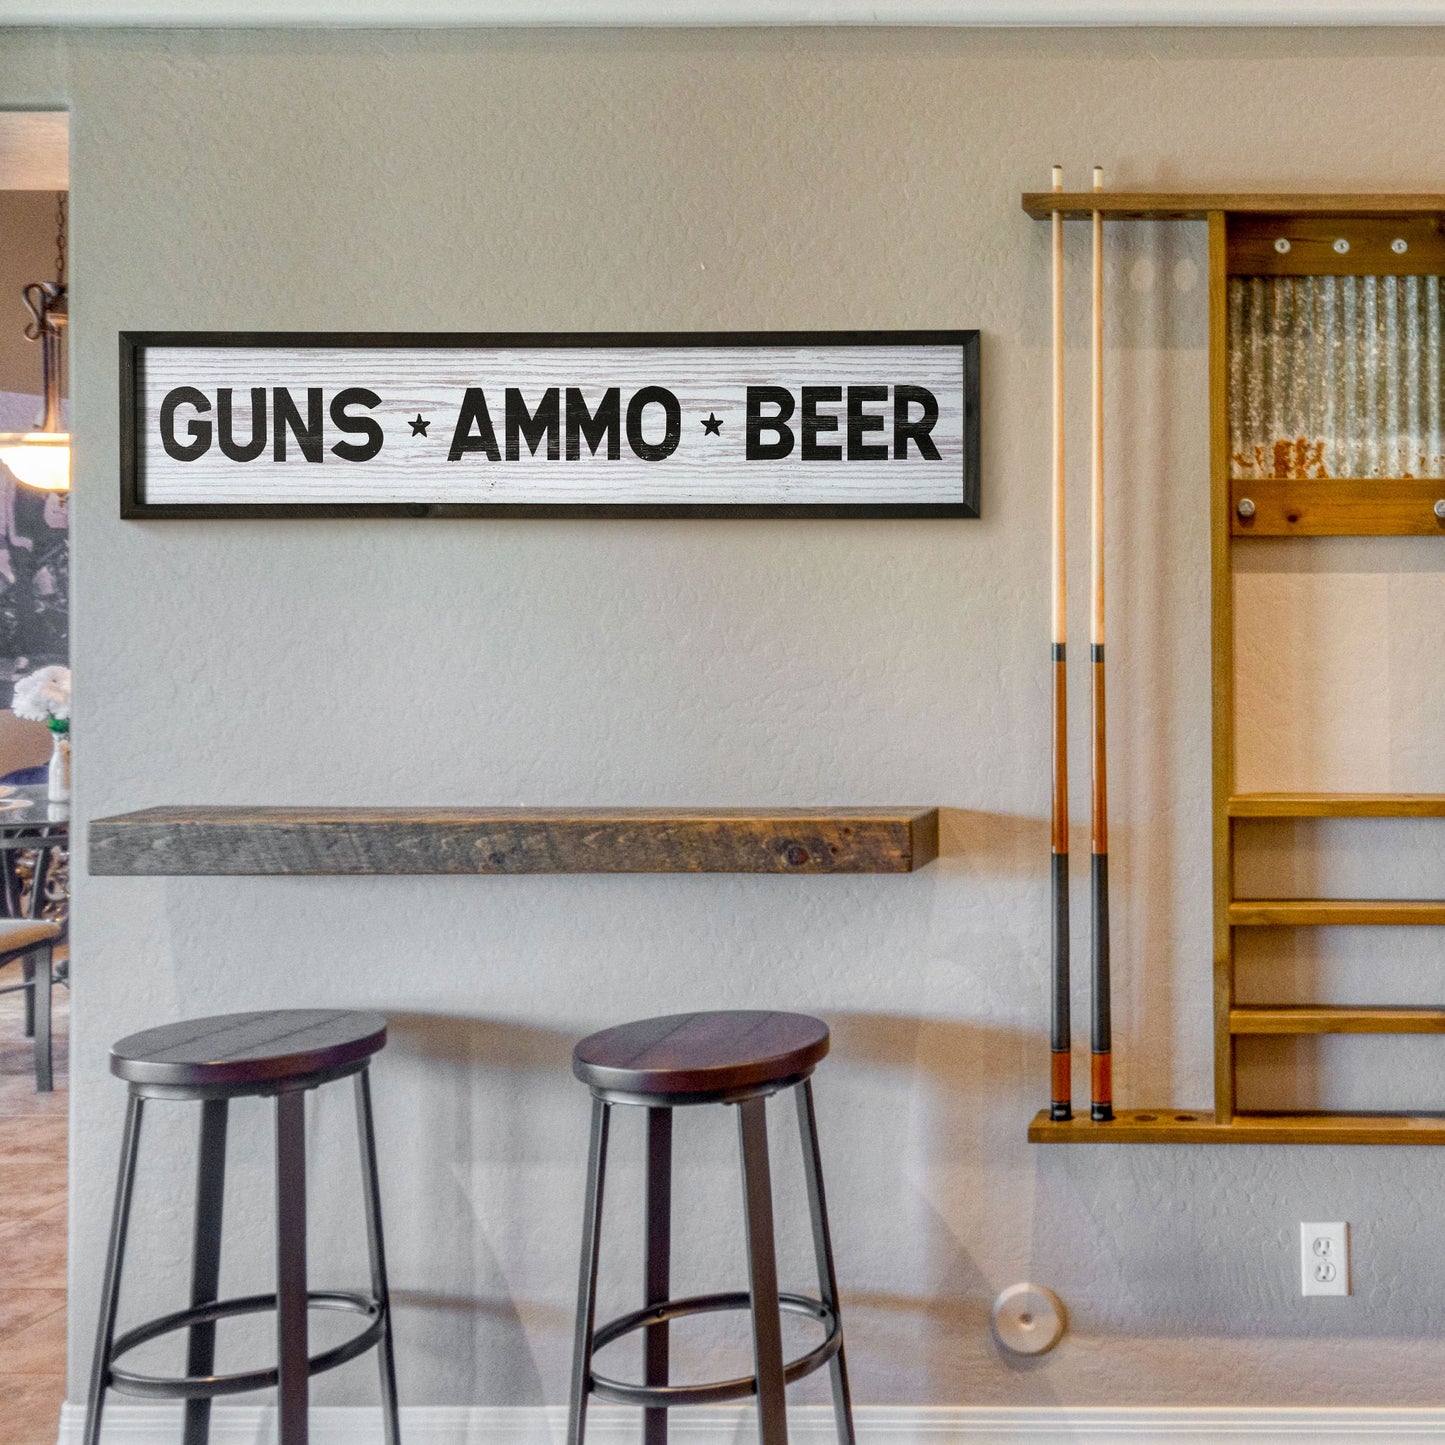 Guns, Ammo, Beer Wood Novelty Wall Sign - 36" x 8"